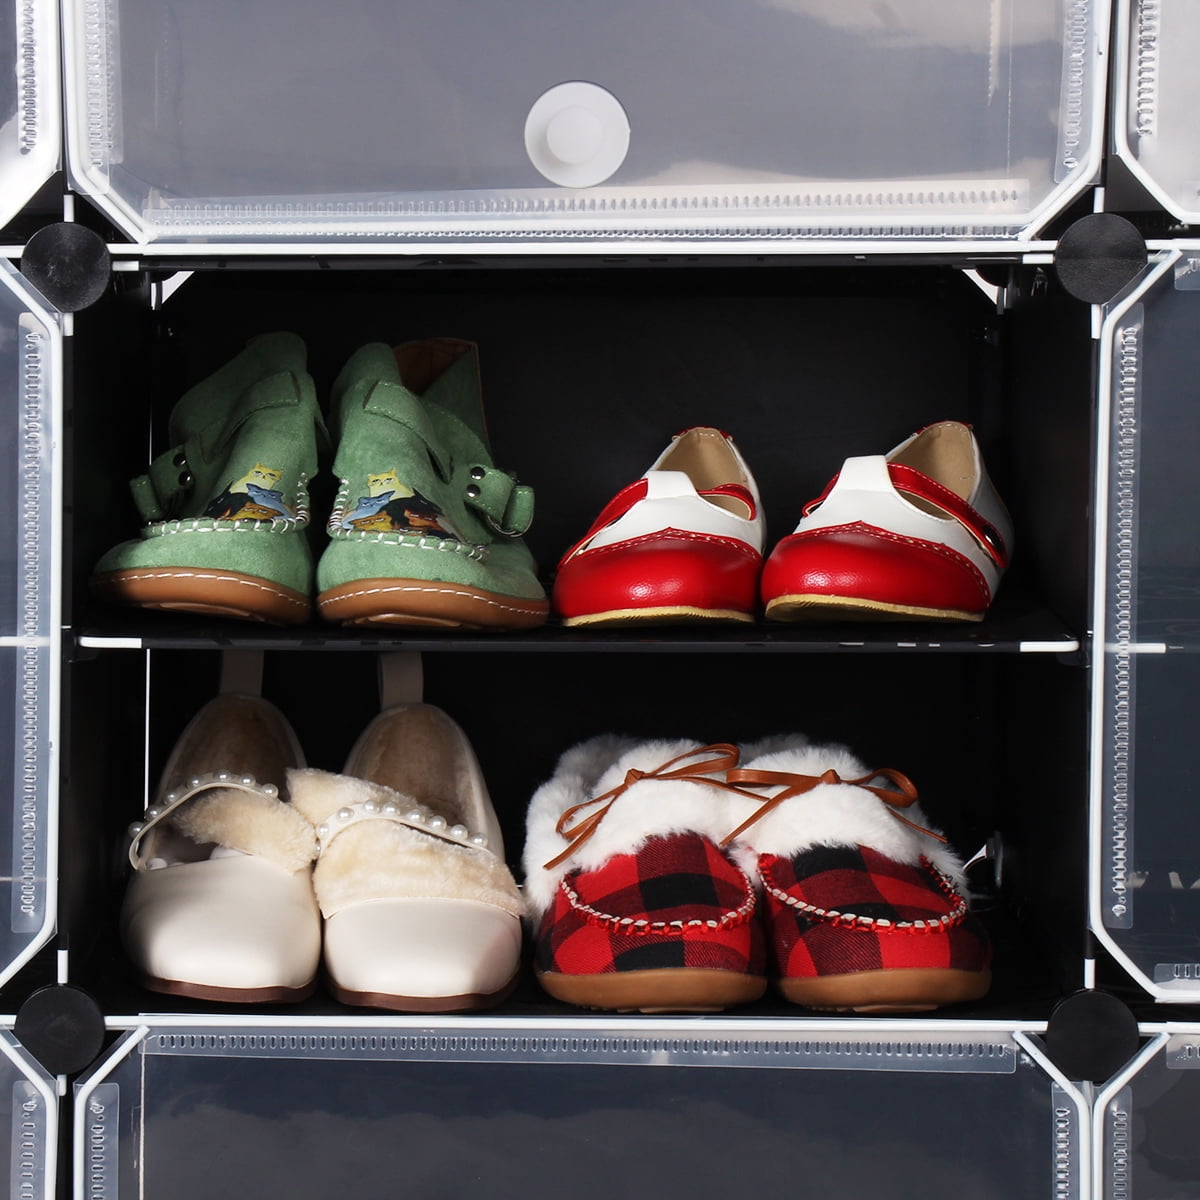 Mulanimo 9 Tiers Shoe Storage Cabinet Shoe Rack with Dustproof Cover Closet Organizer, Gray